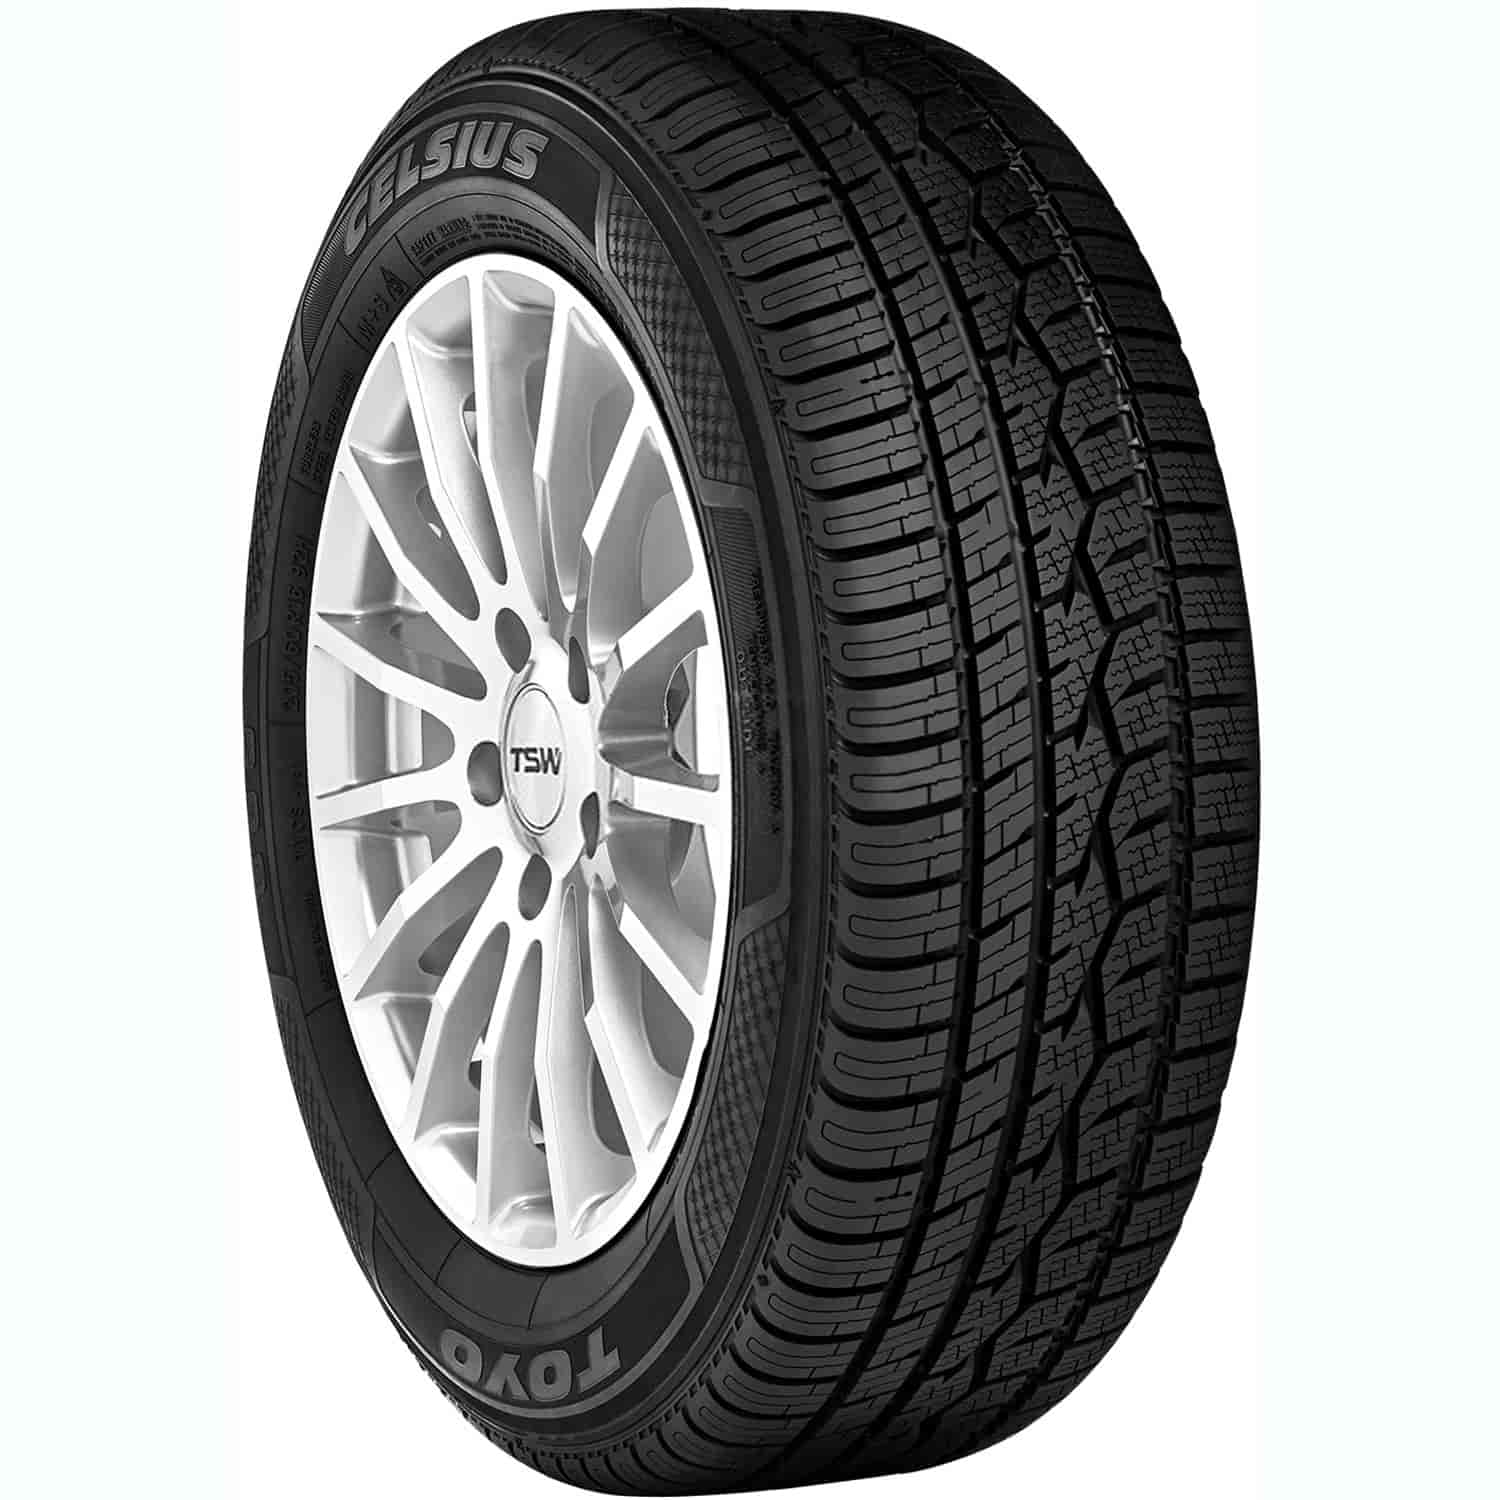 Celsius Passenger Car Tire 235/50R17 96V